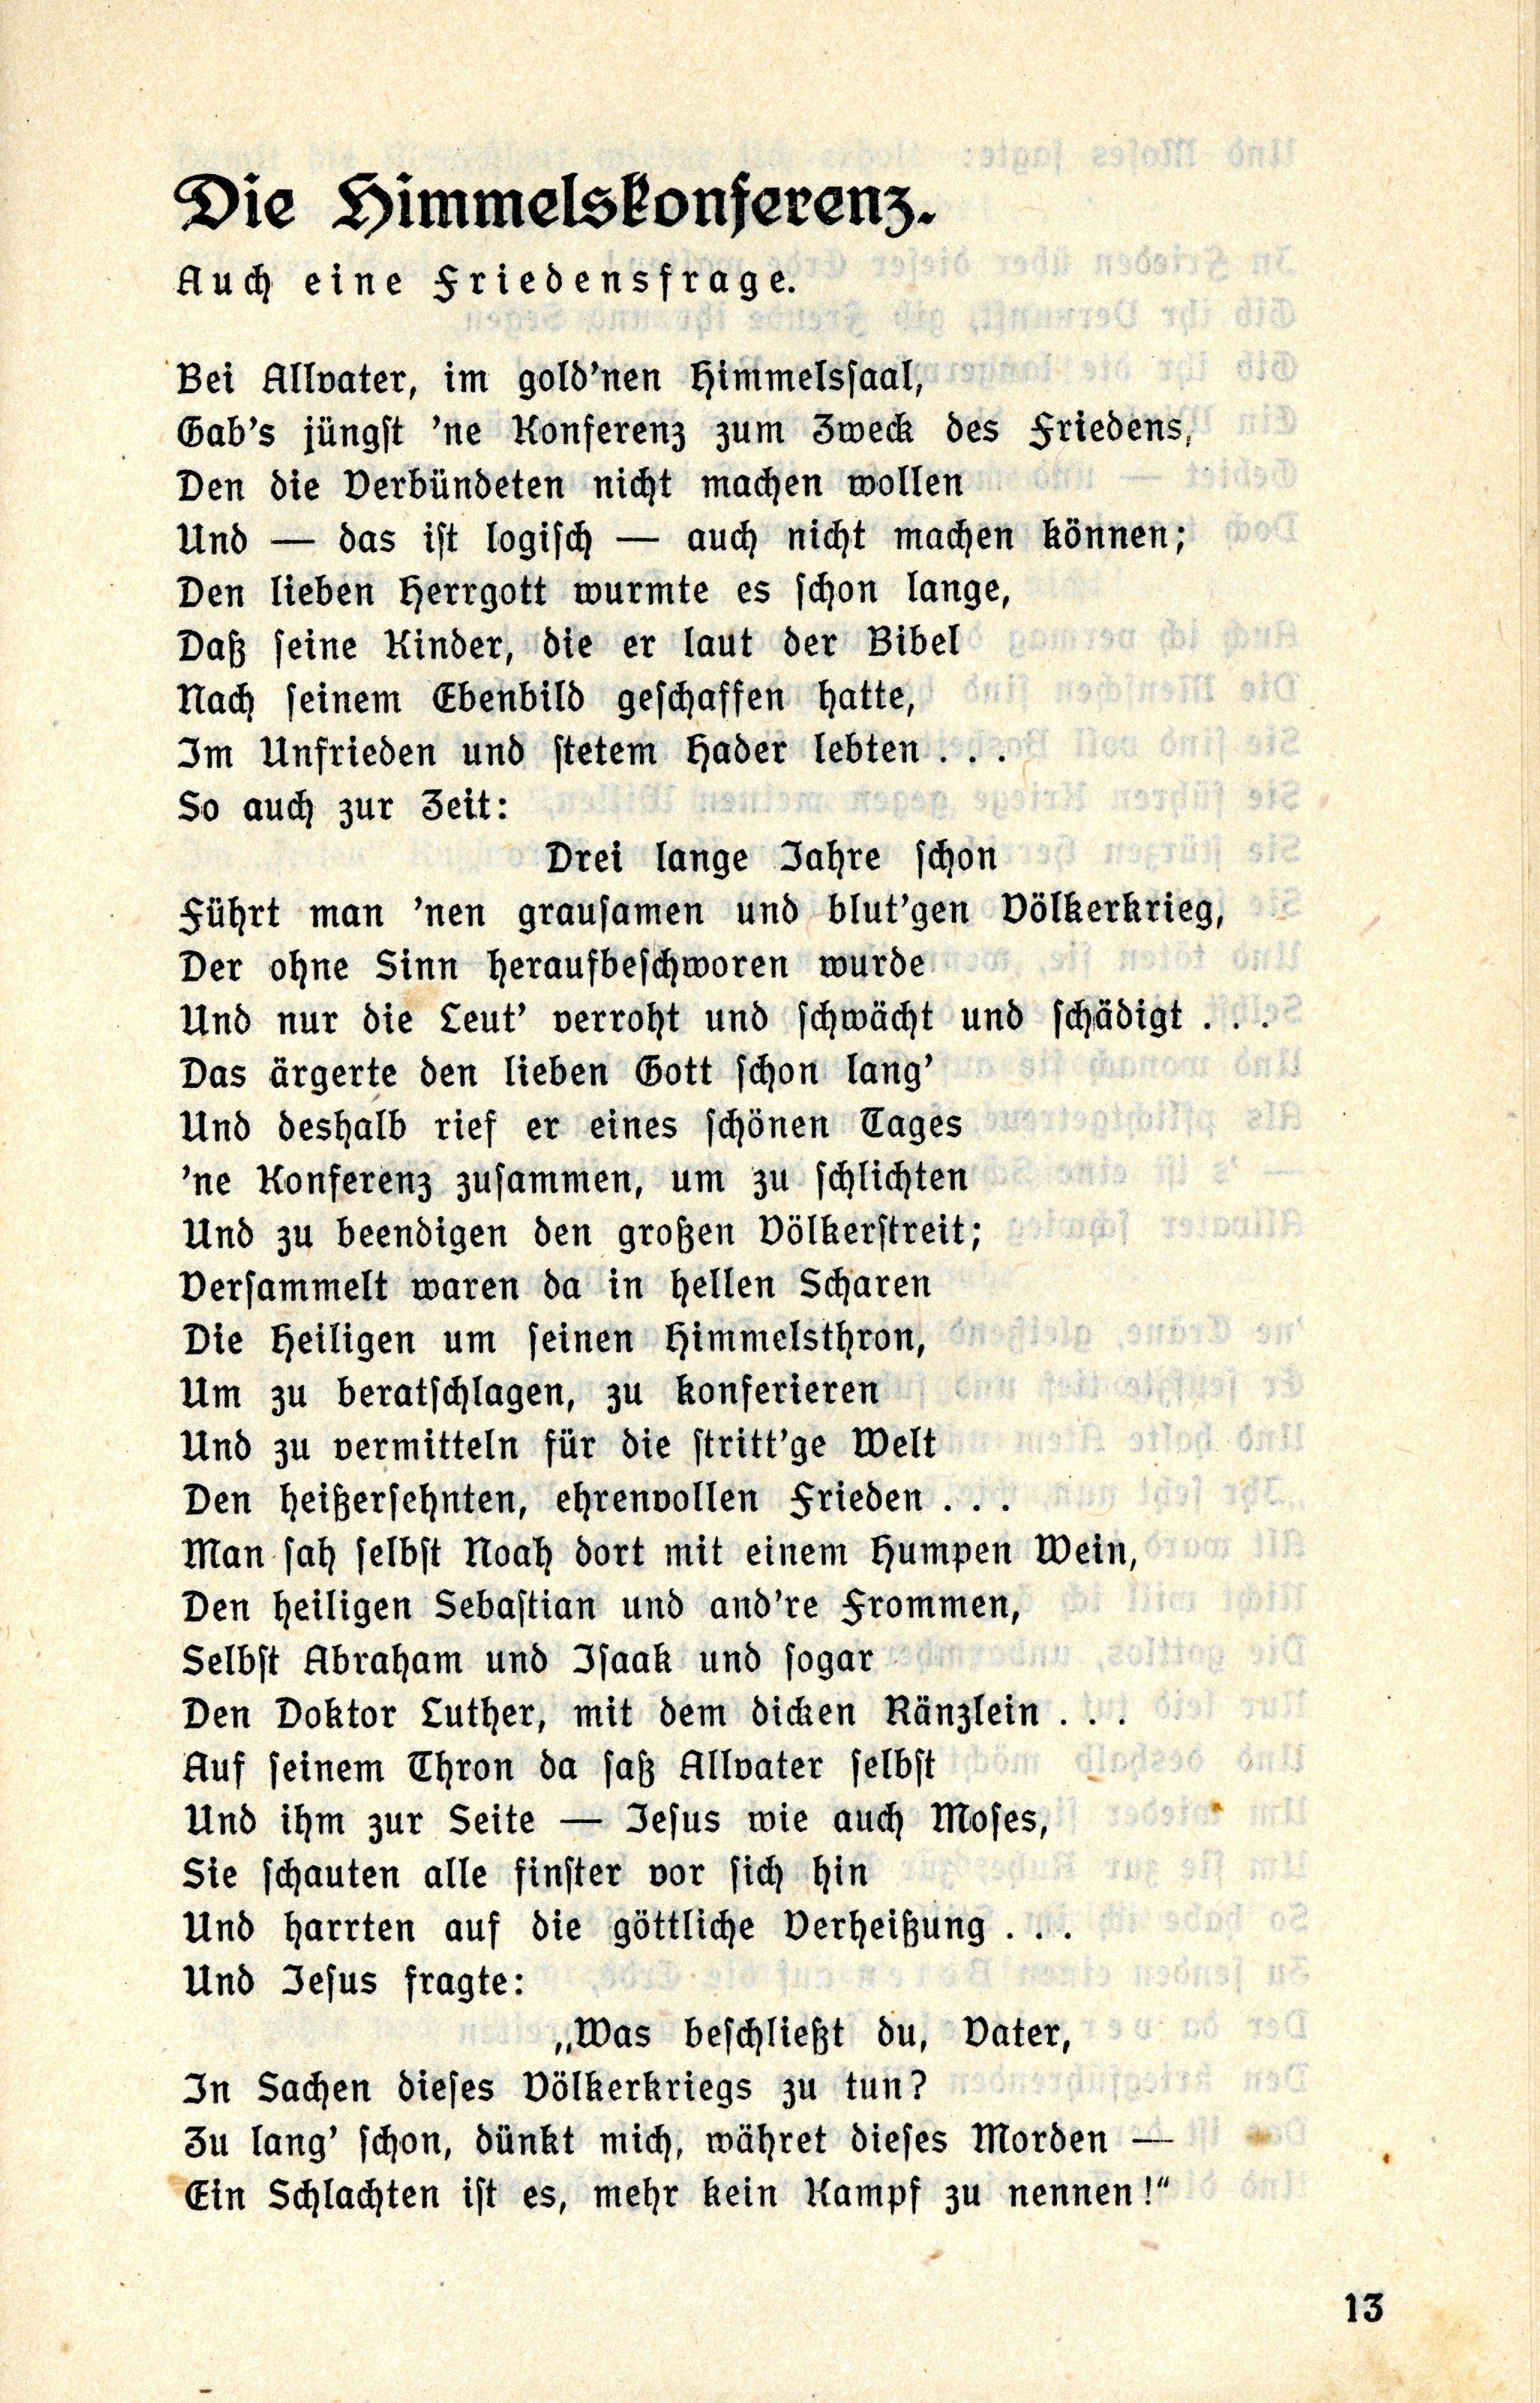 Der Balte im Maulkorb (1917) | 14. (13) Main body of text